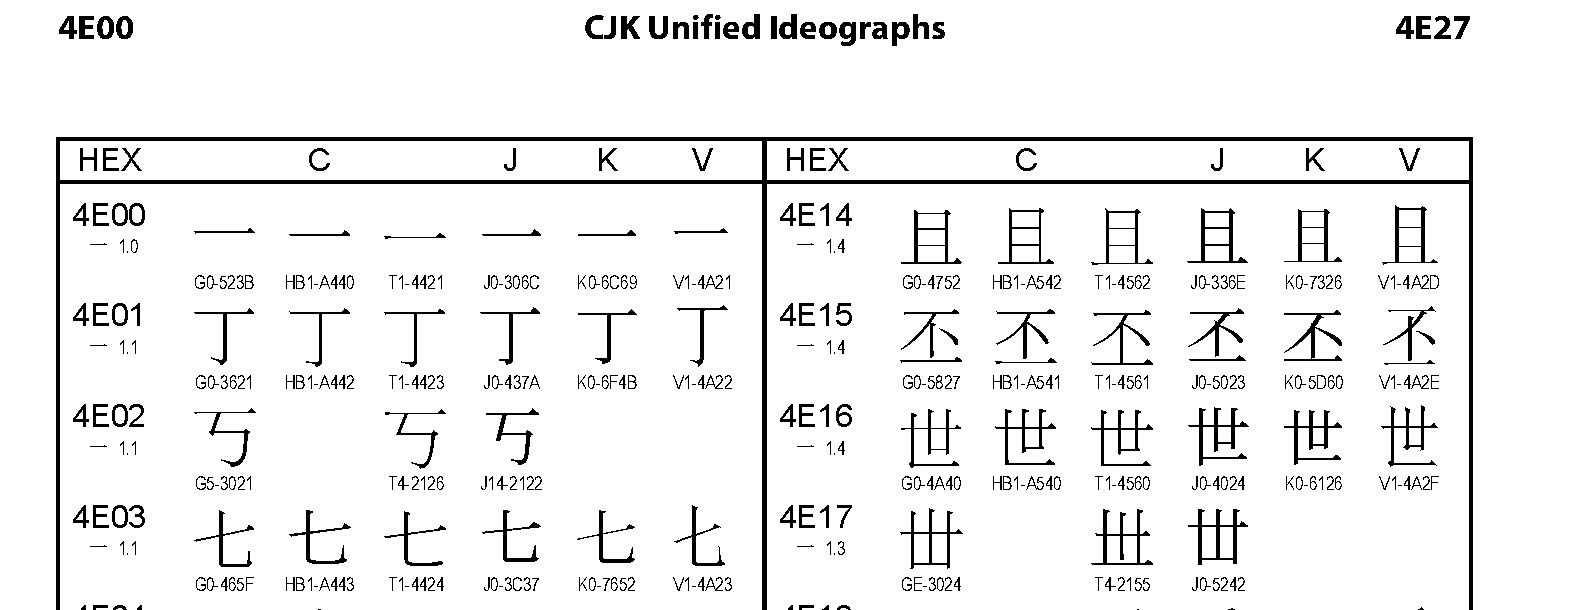 Unicode - CJK Unified Ideographs